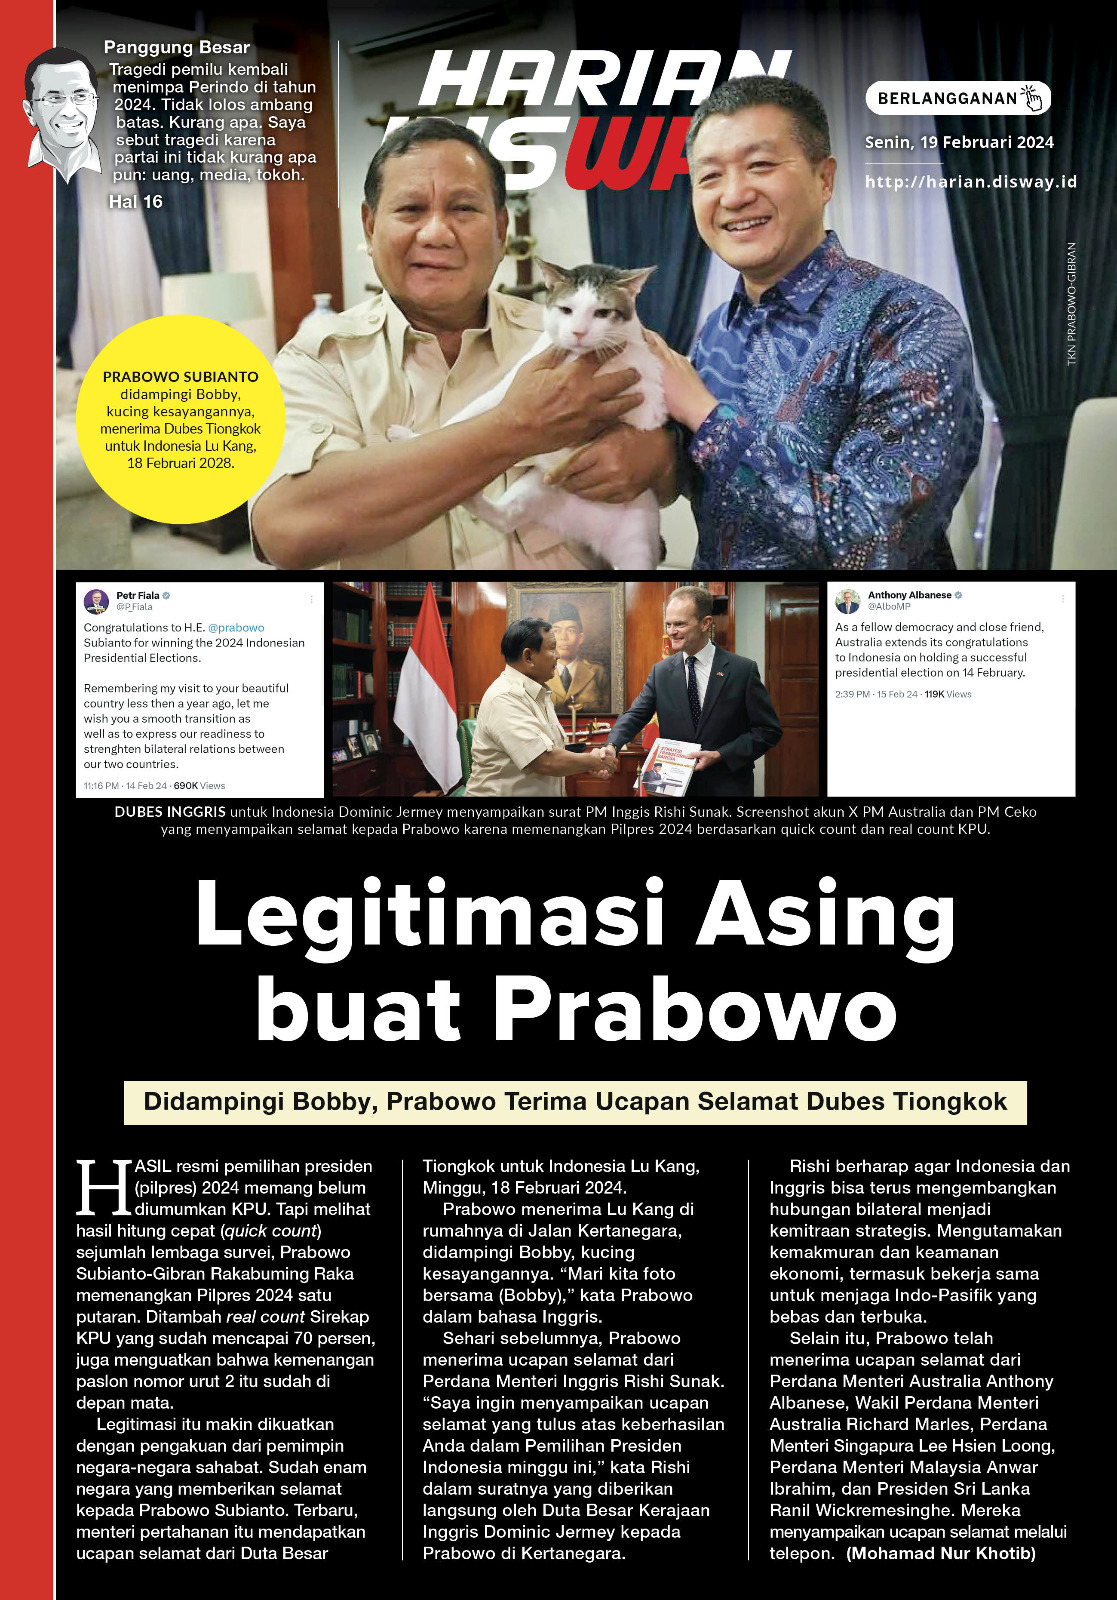 Legitimasi Asing buat Prabowo